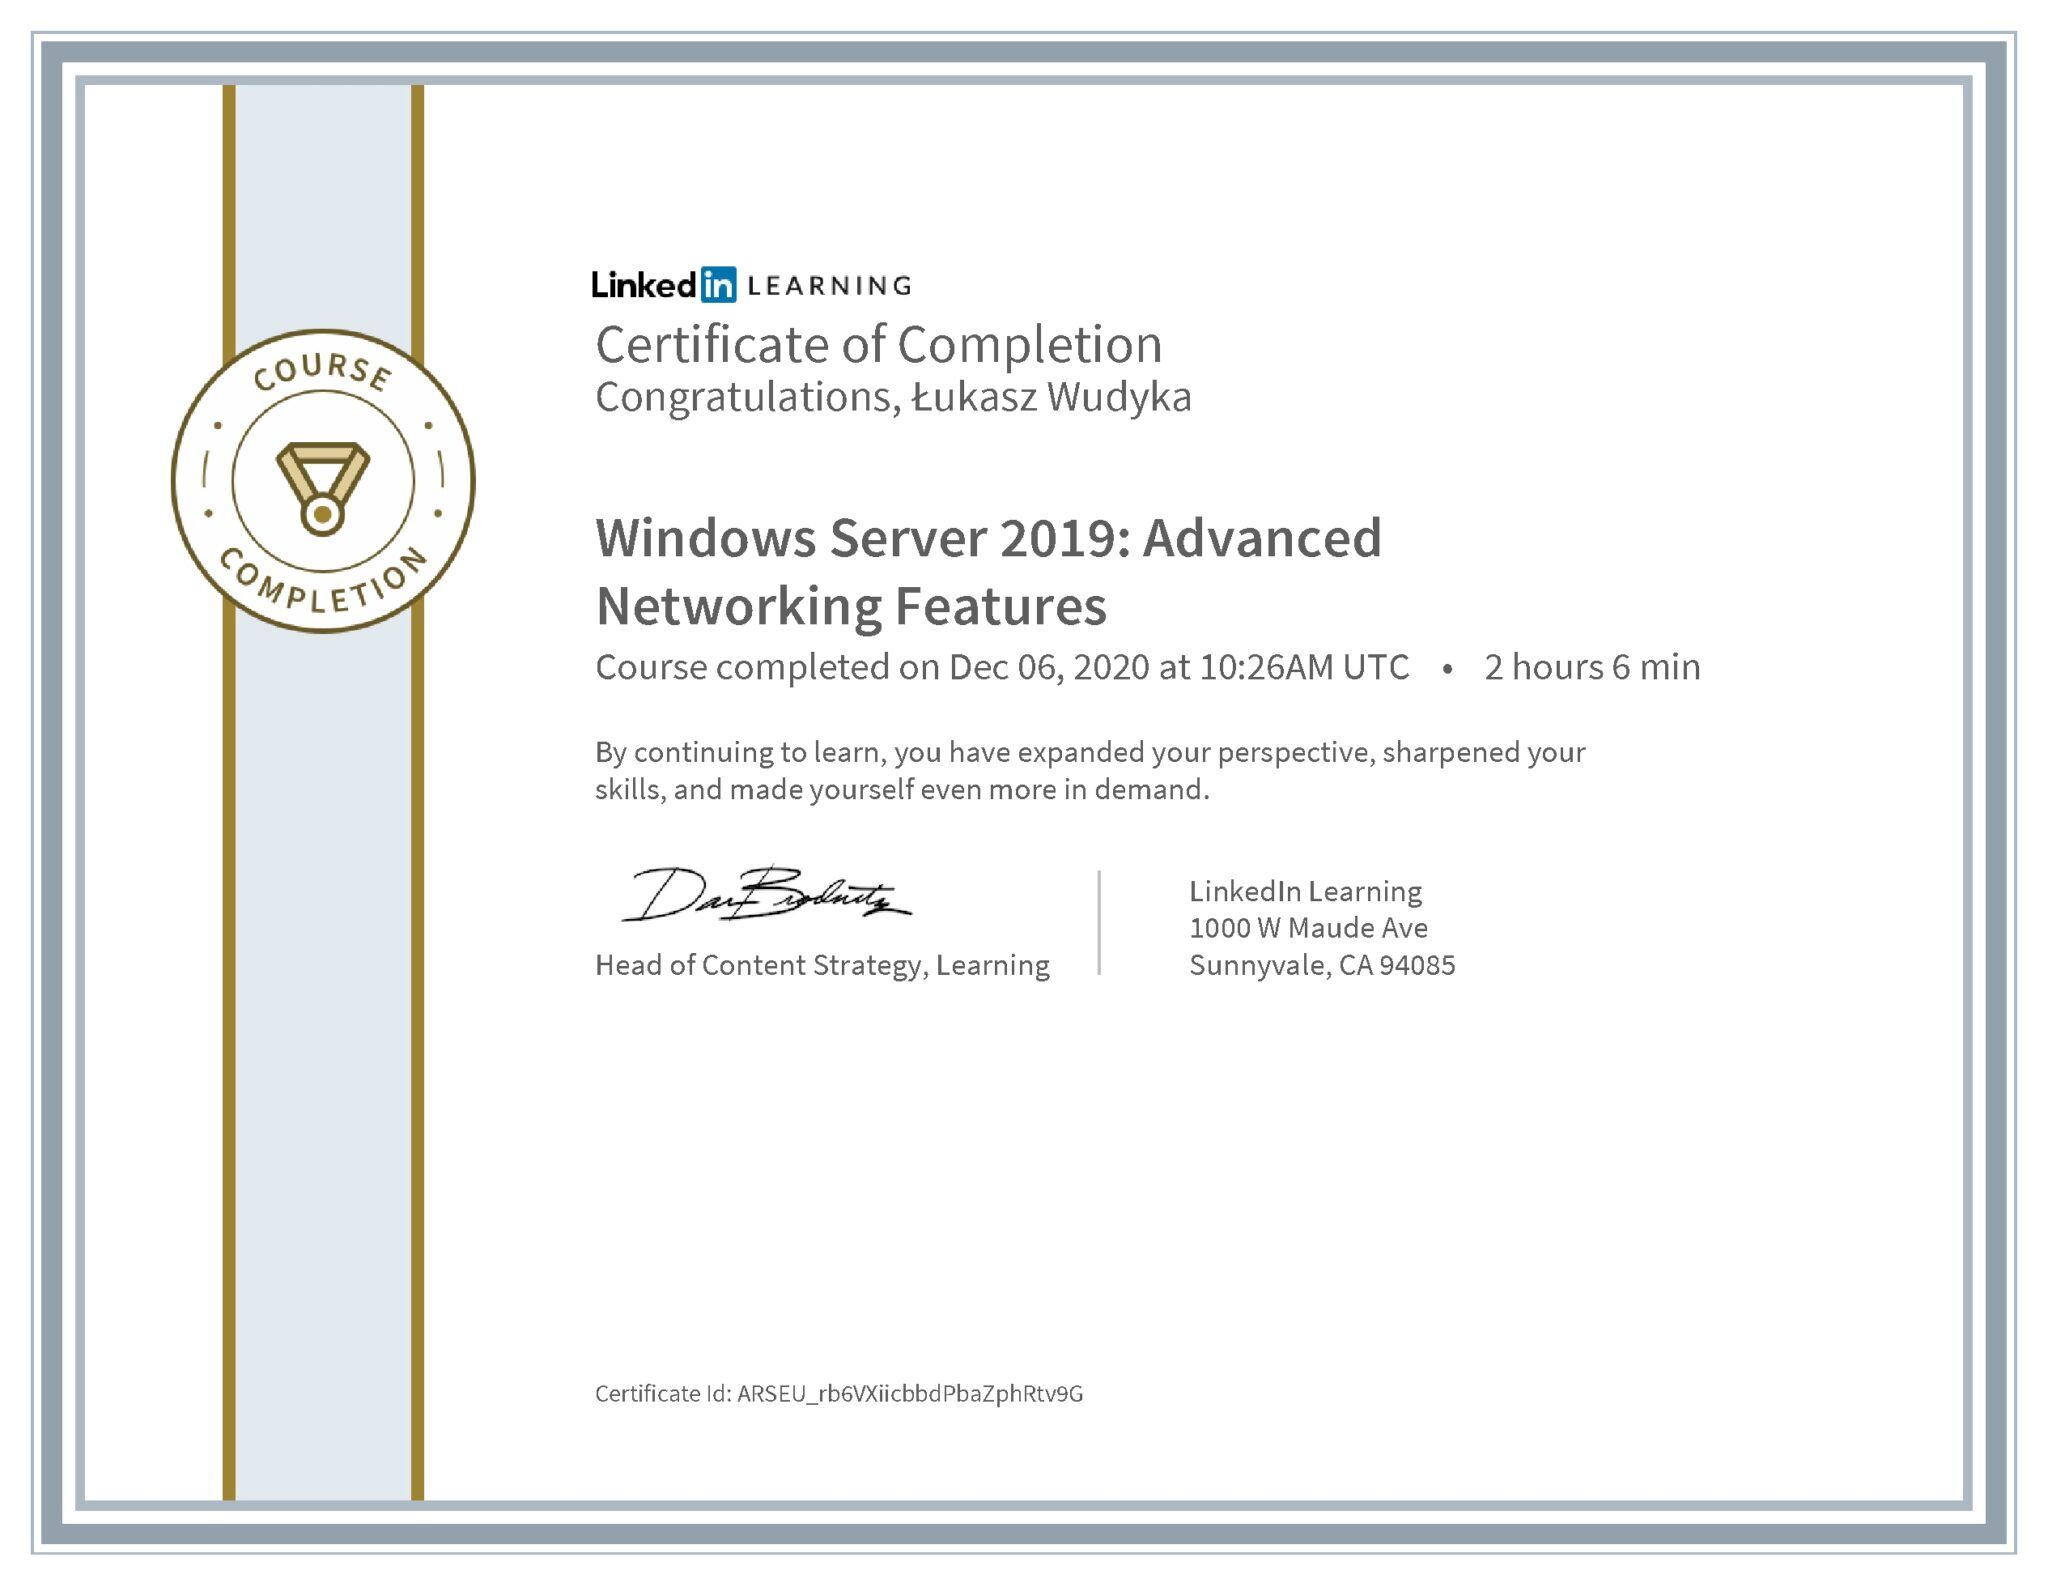 Łukasz Wudyka certyfikat LinkedIn Windows Server 2019: Advanced Networking Features